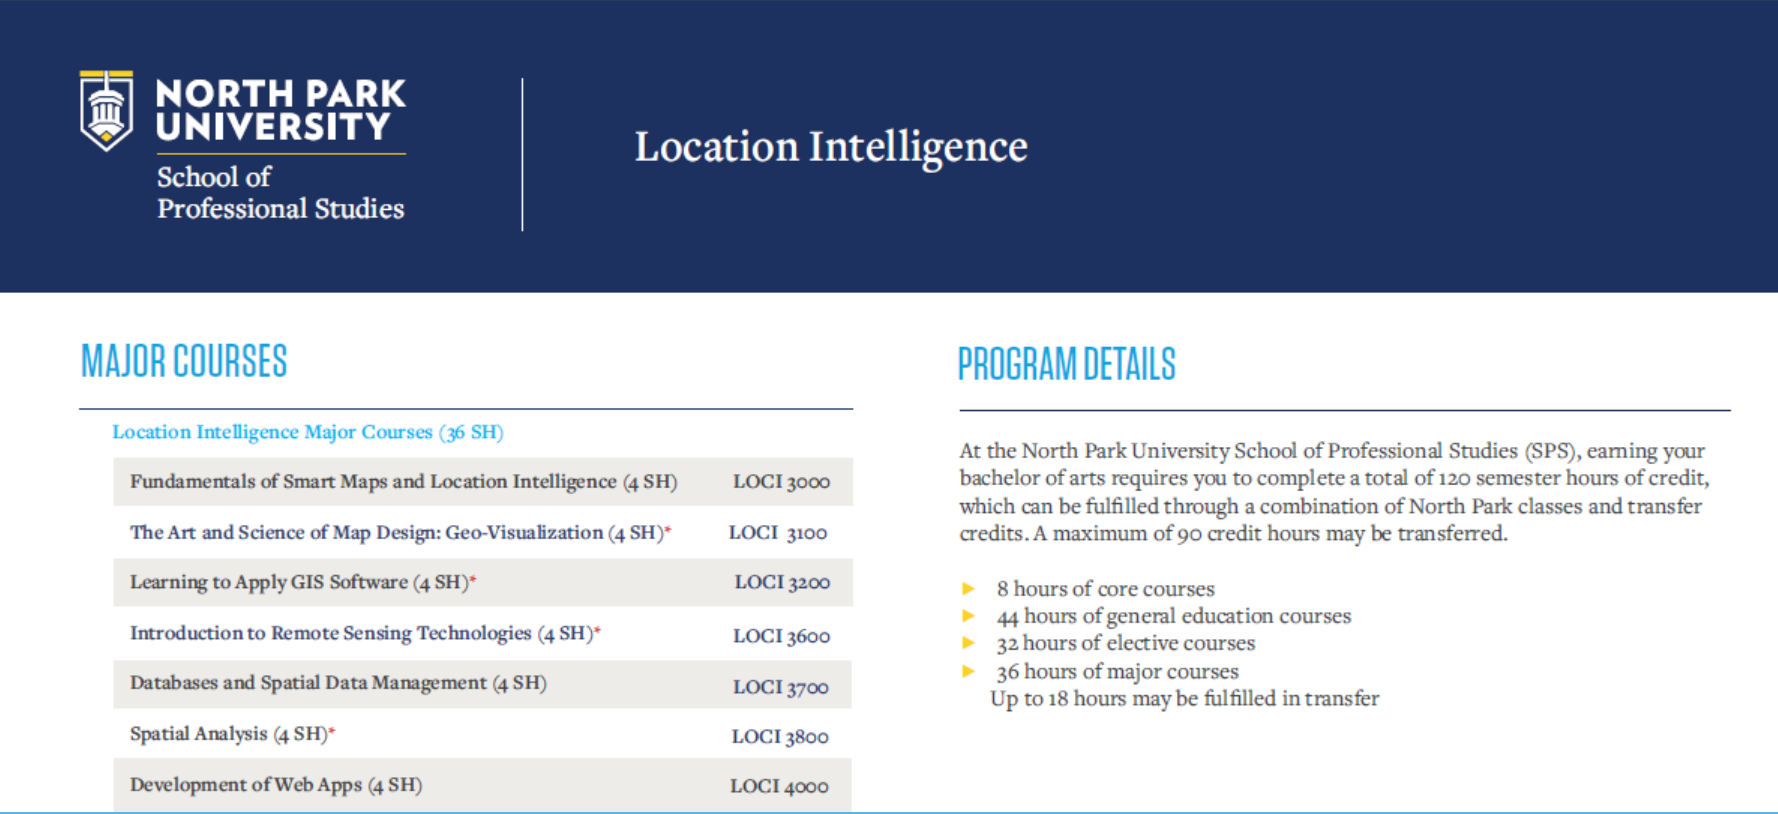 Location Intelligence Program at North Park University